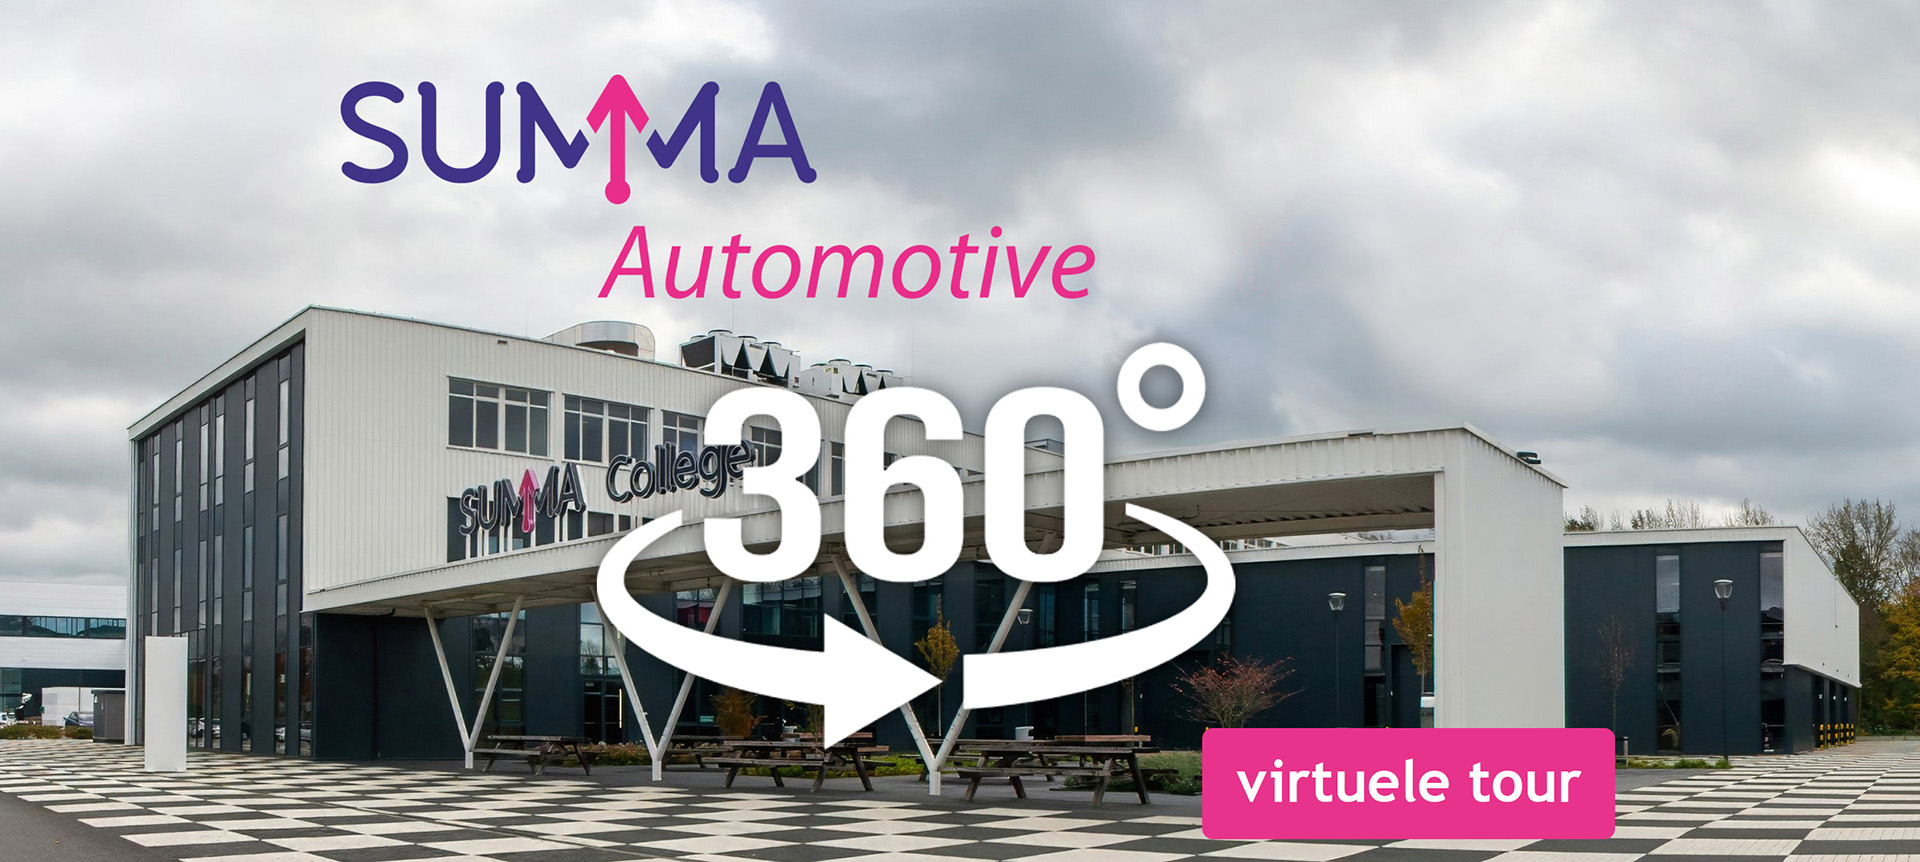 Summa Automotive virtuele tour 360